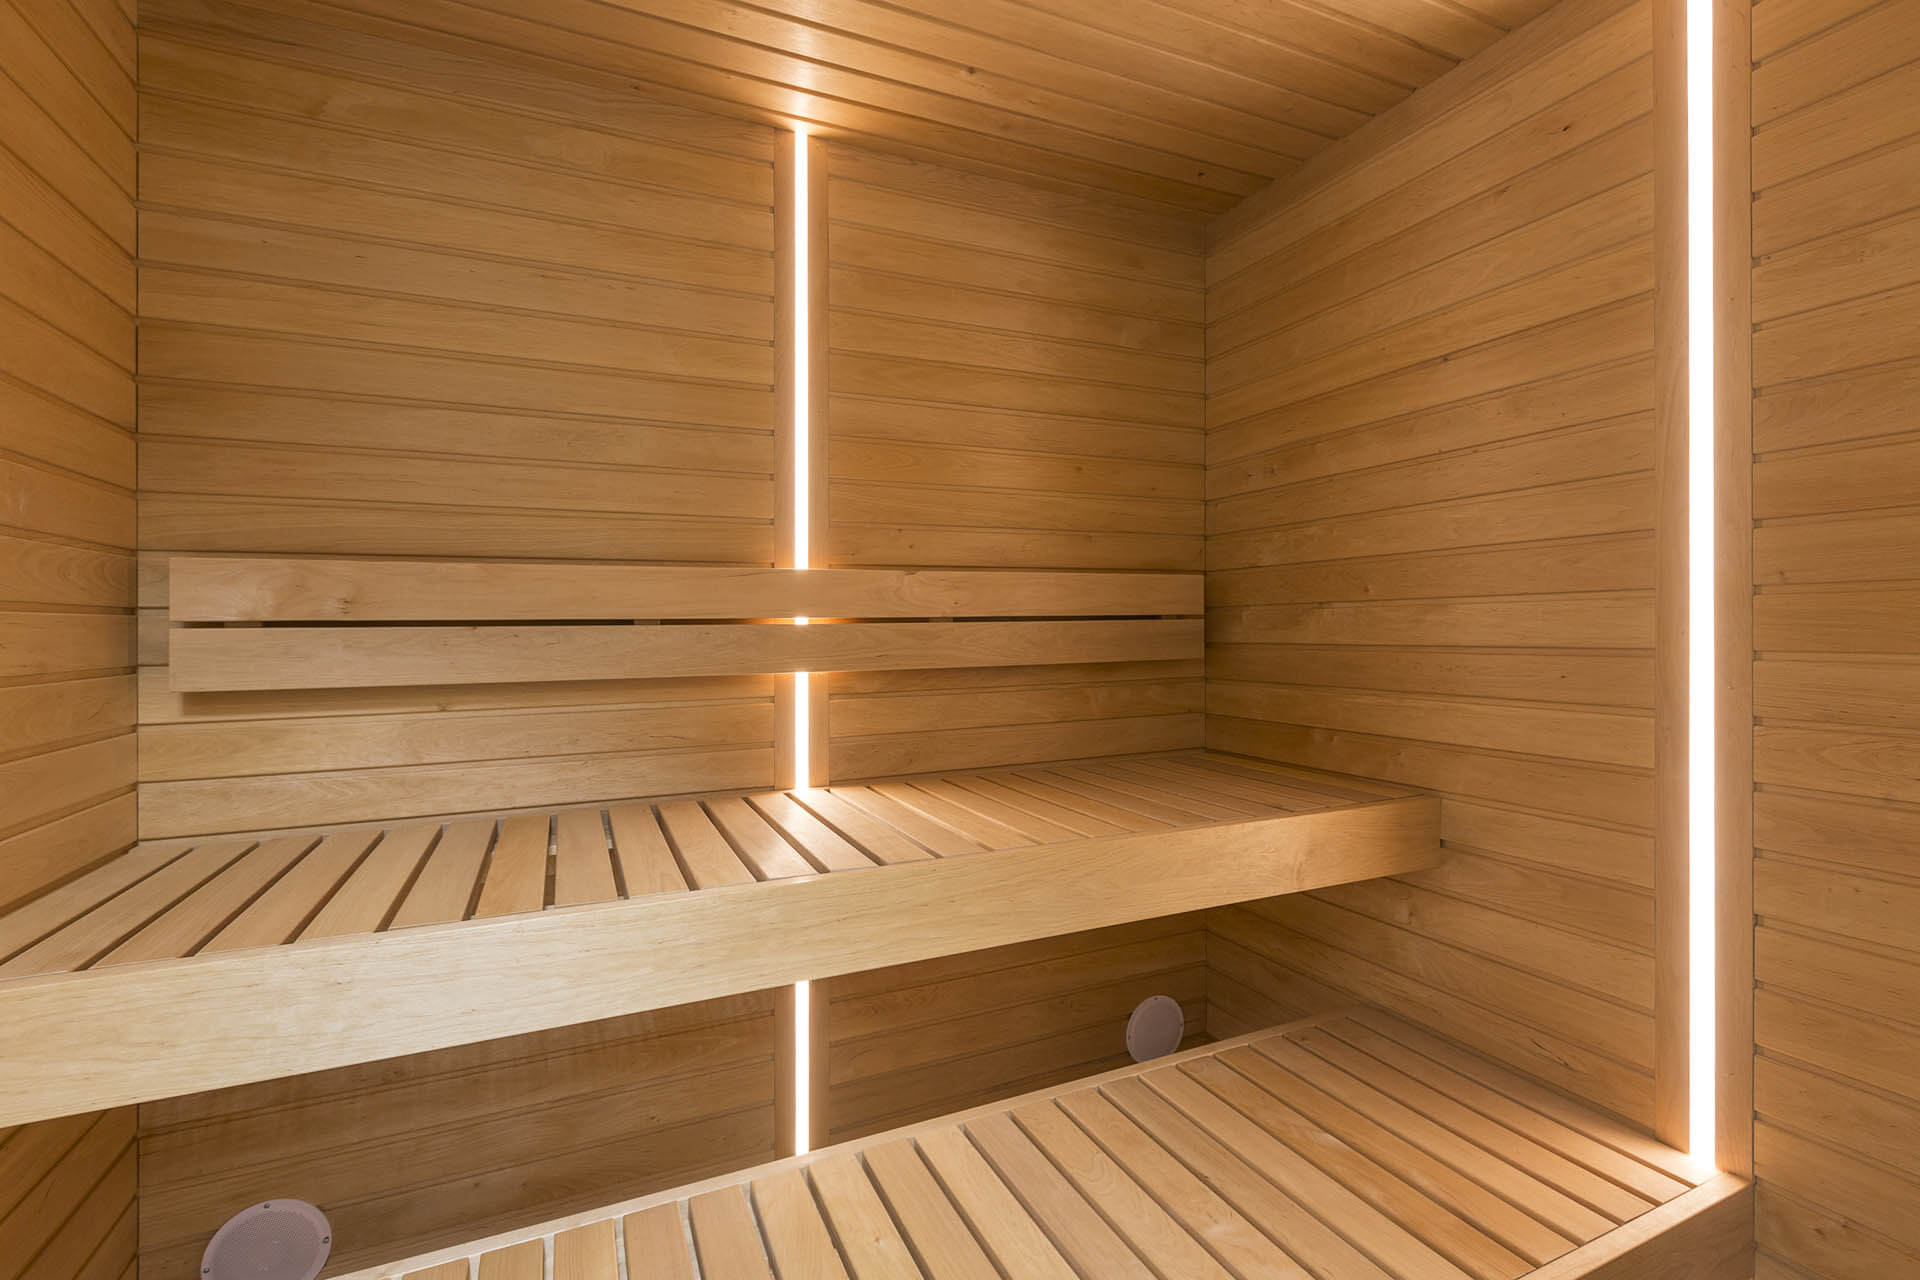 Intérieur du sauna intérieur Varia vendu par Aqua éruptions